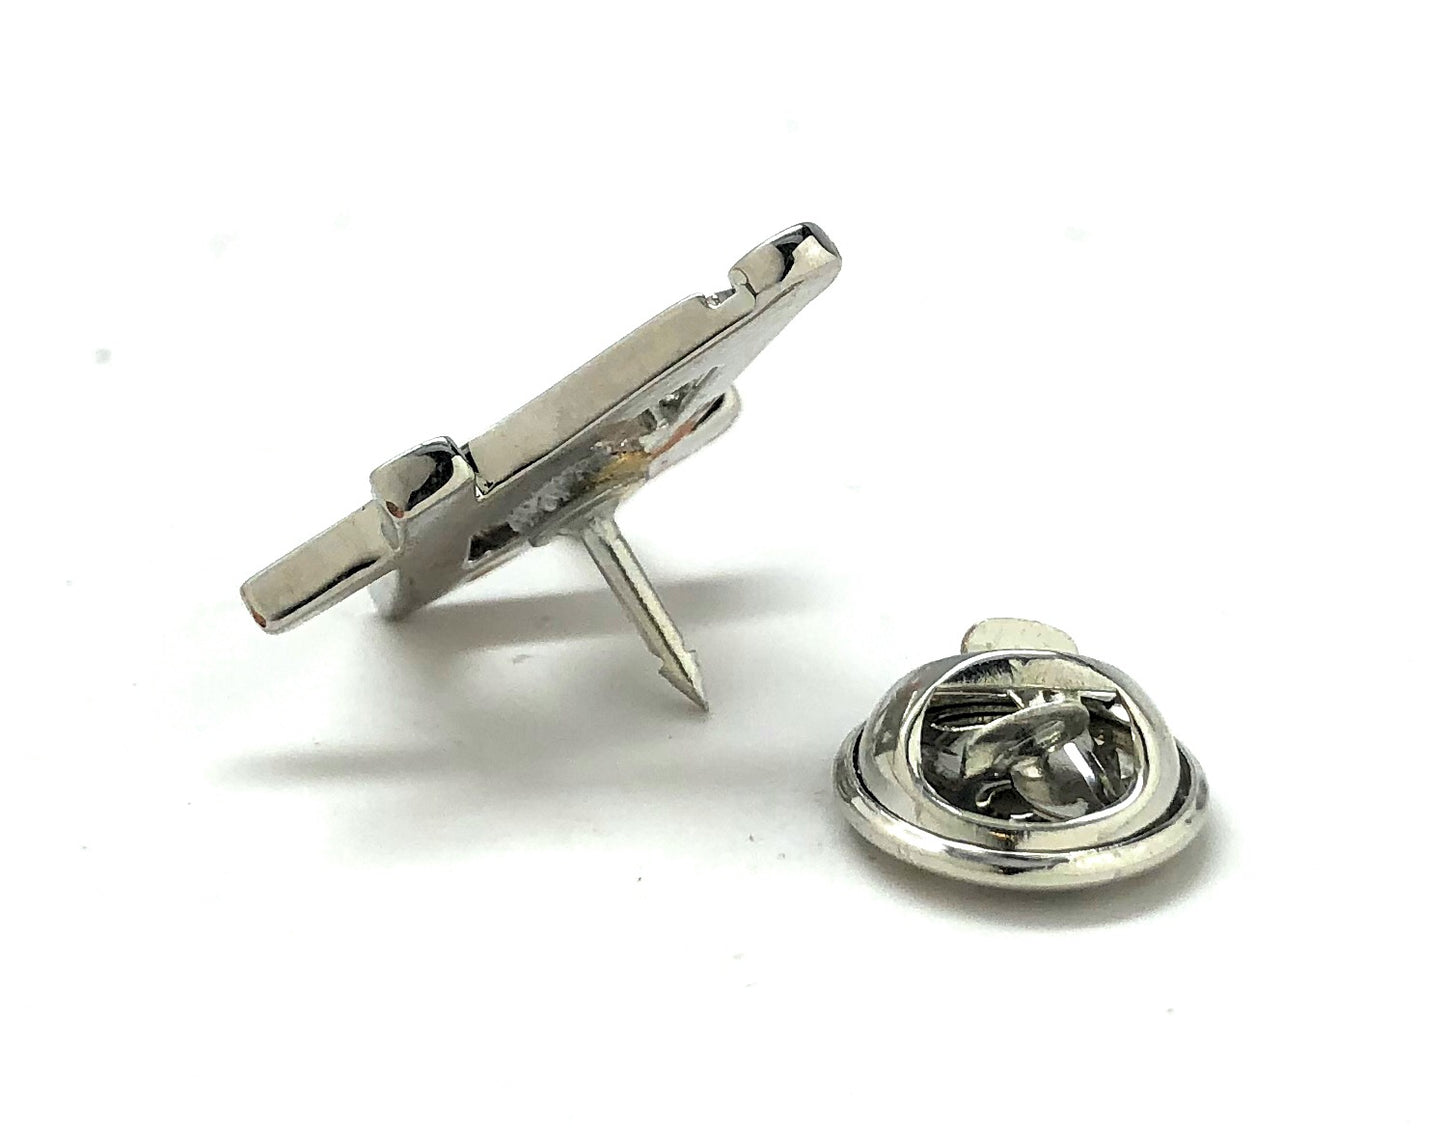 Freemasonry Pin Masonic Symbol Lapel Pin Freemason Enamel Pin Silver Tone Cut Out Compass and Square Tie Tack Comes in Gift Box